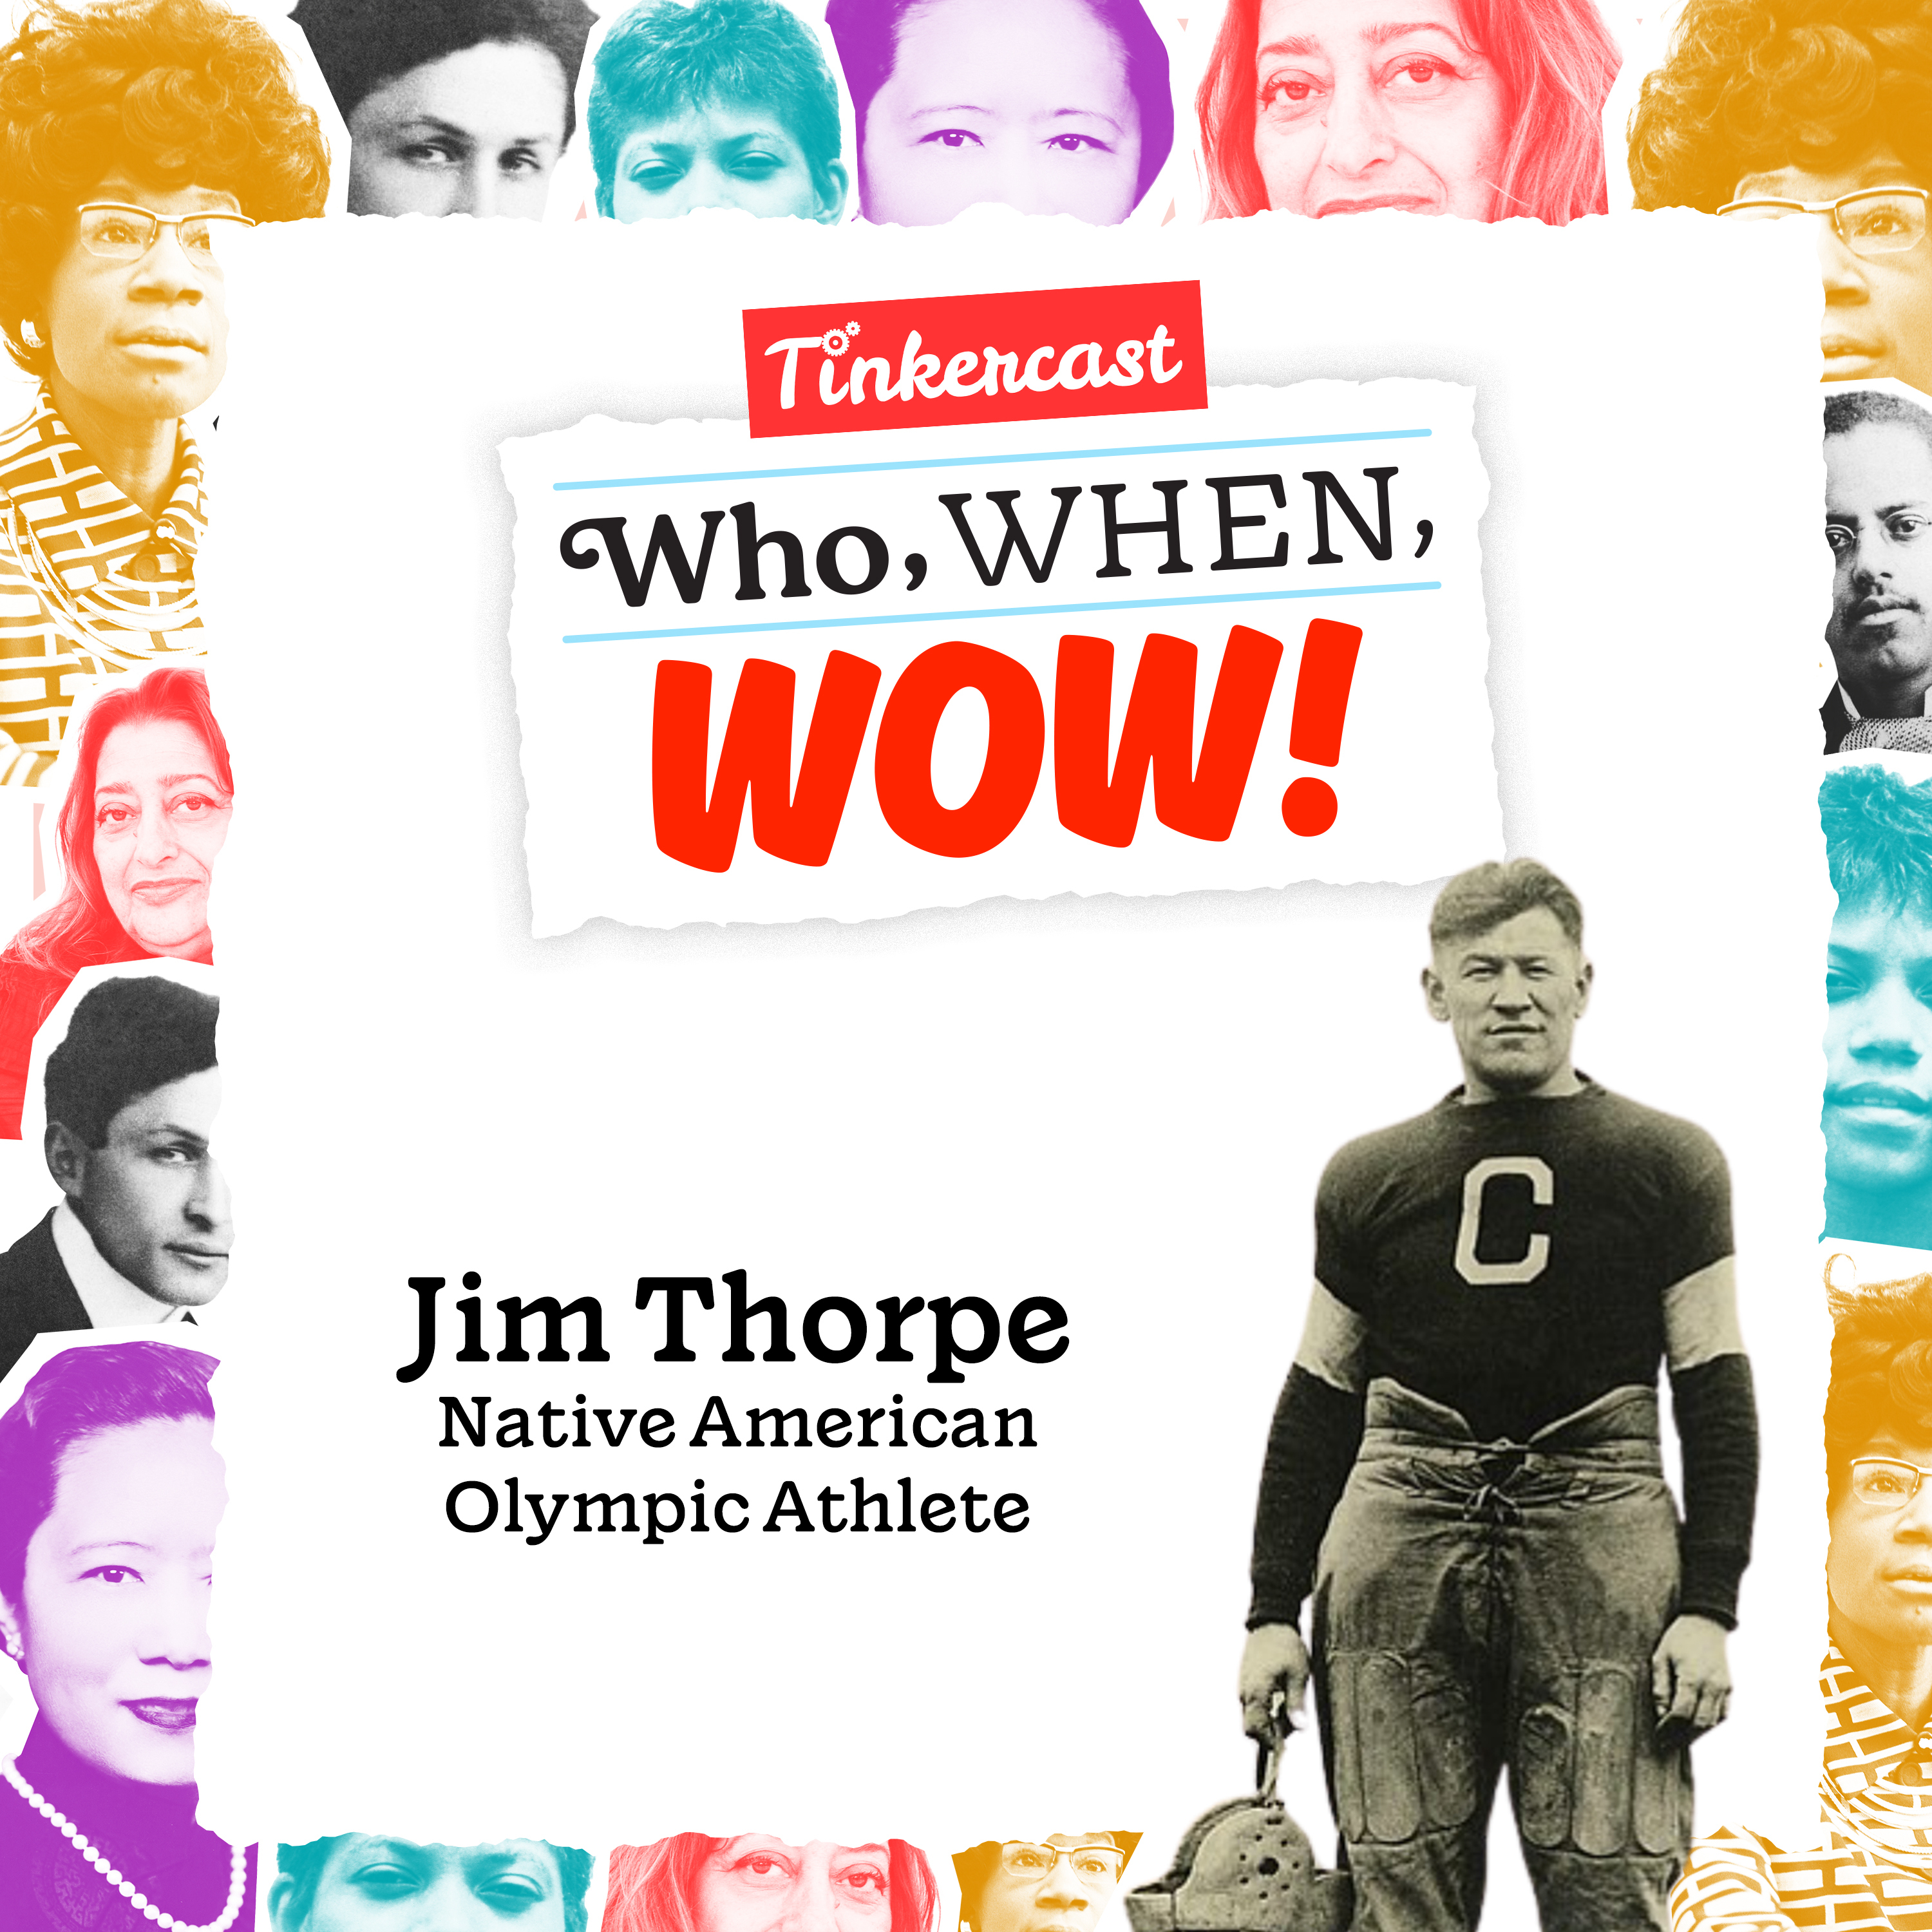 Jim Thorpe: Olympic Athlete